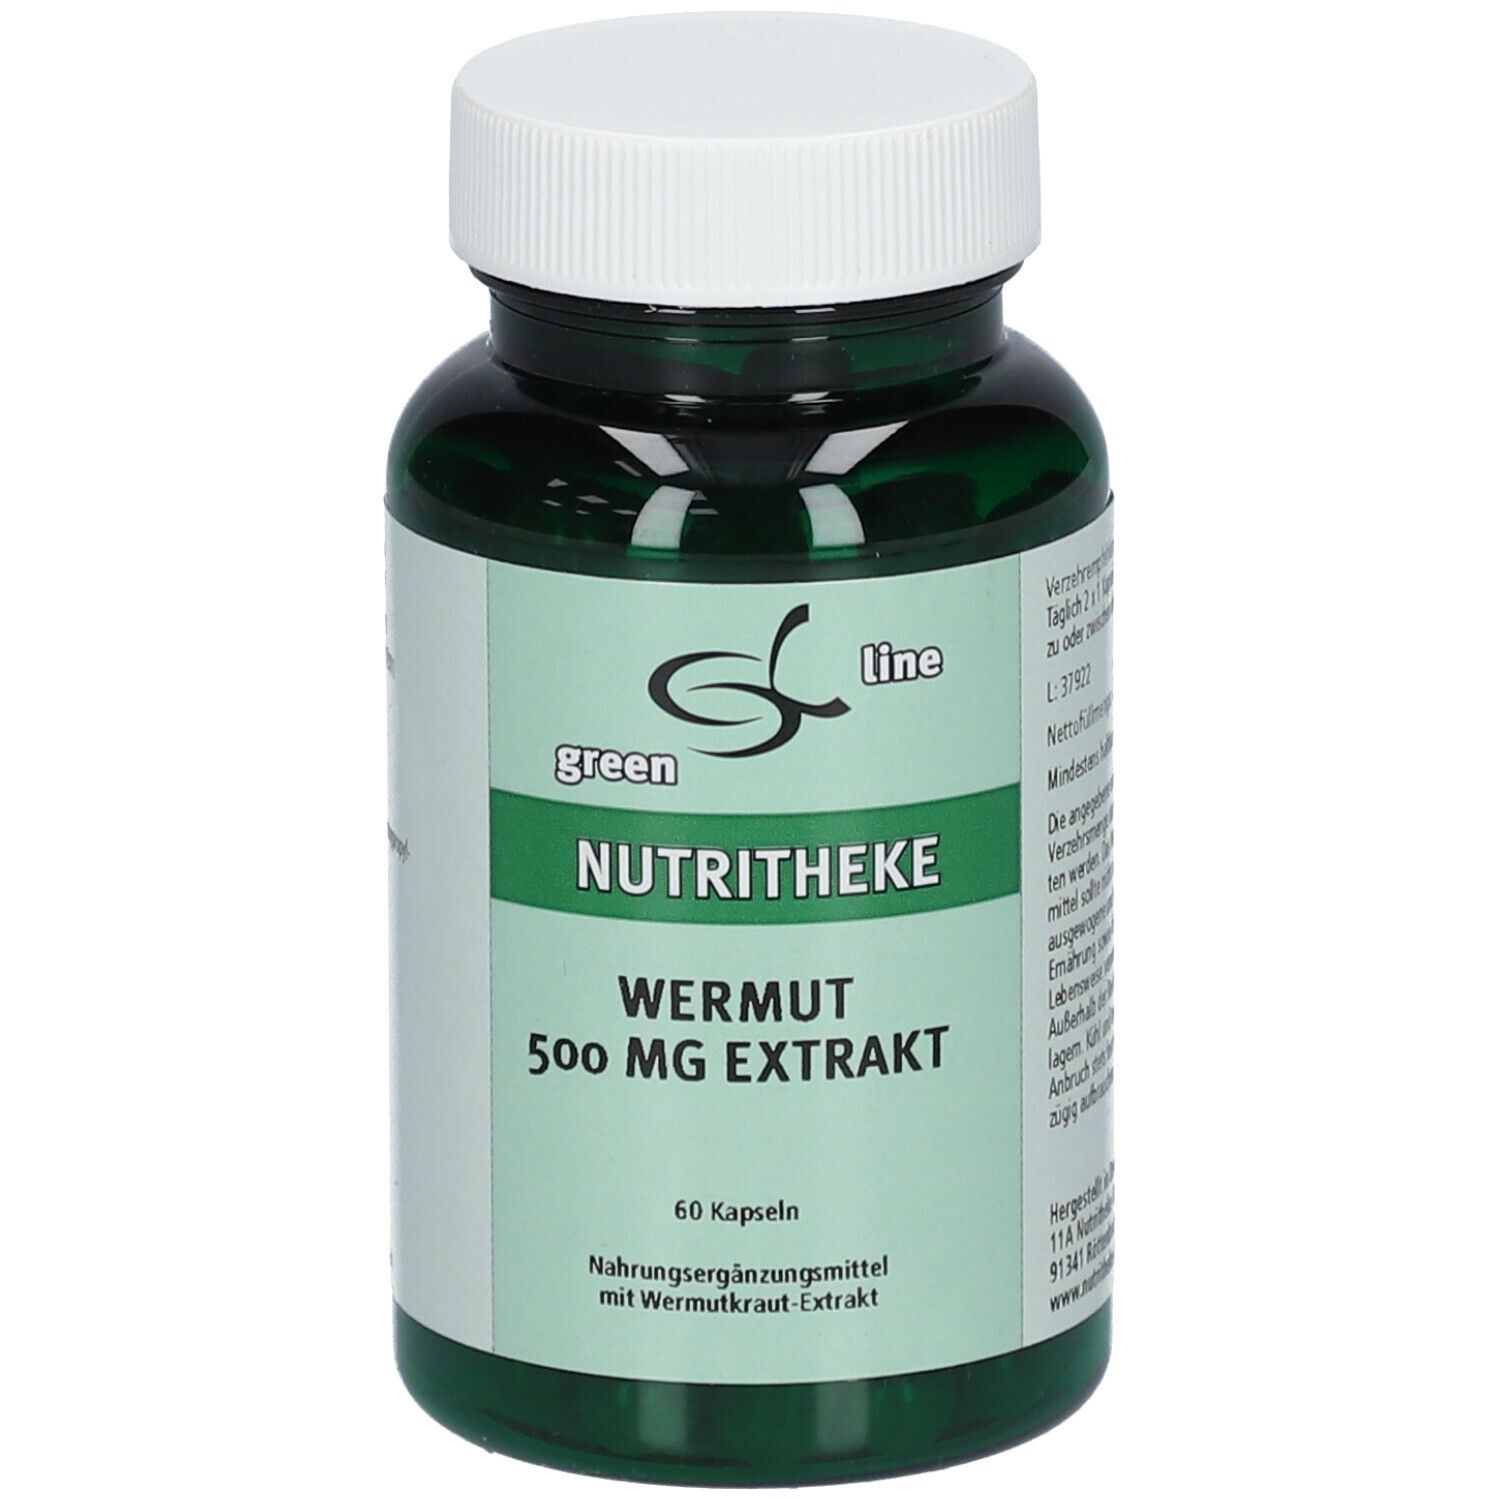 11 A Nutritheke GmbH green line Wermut 500 mg Extrakt